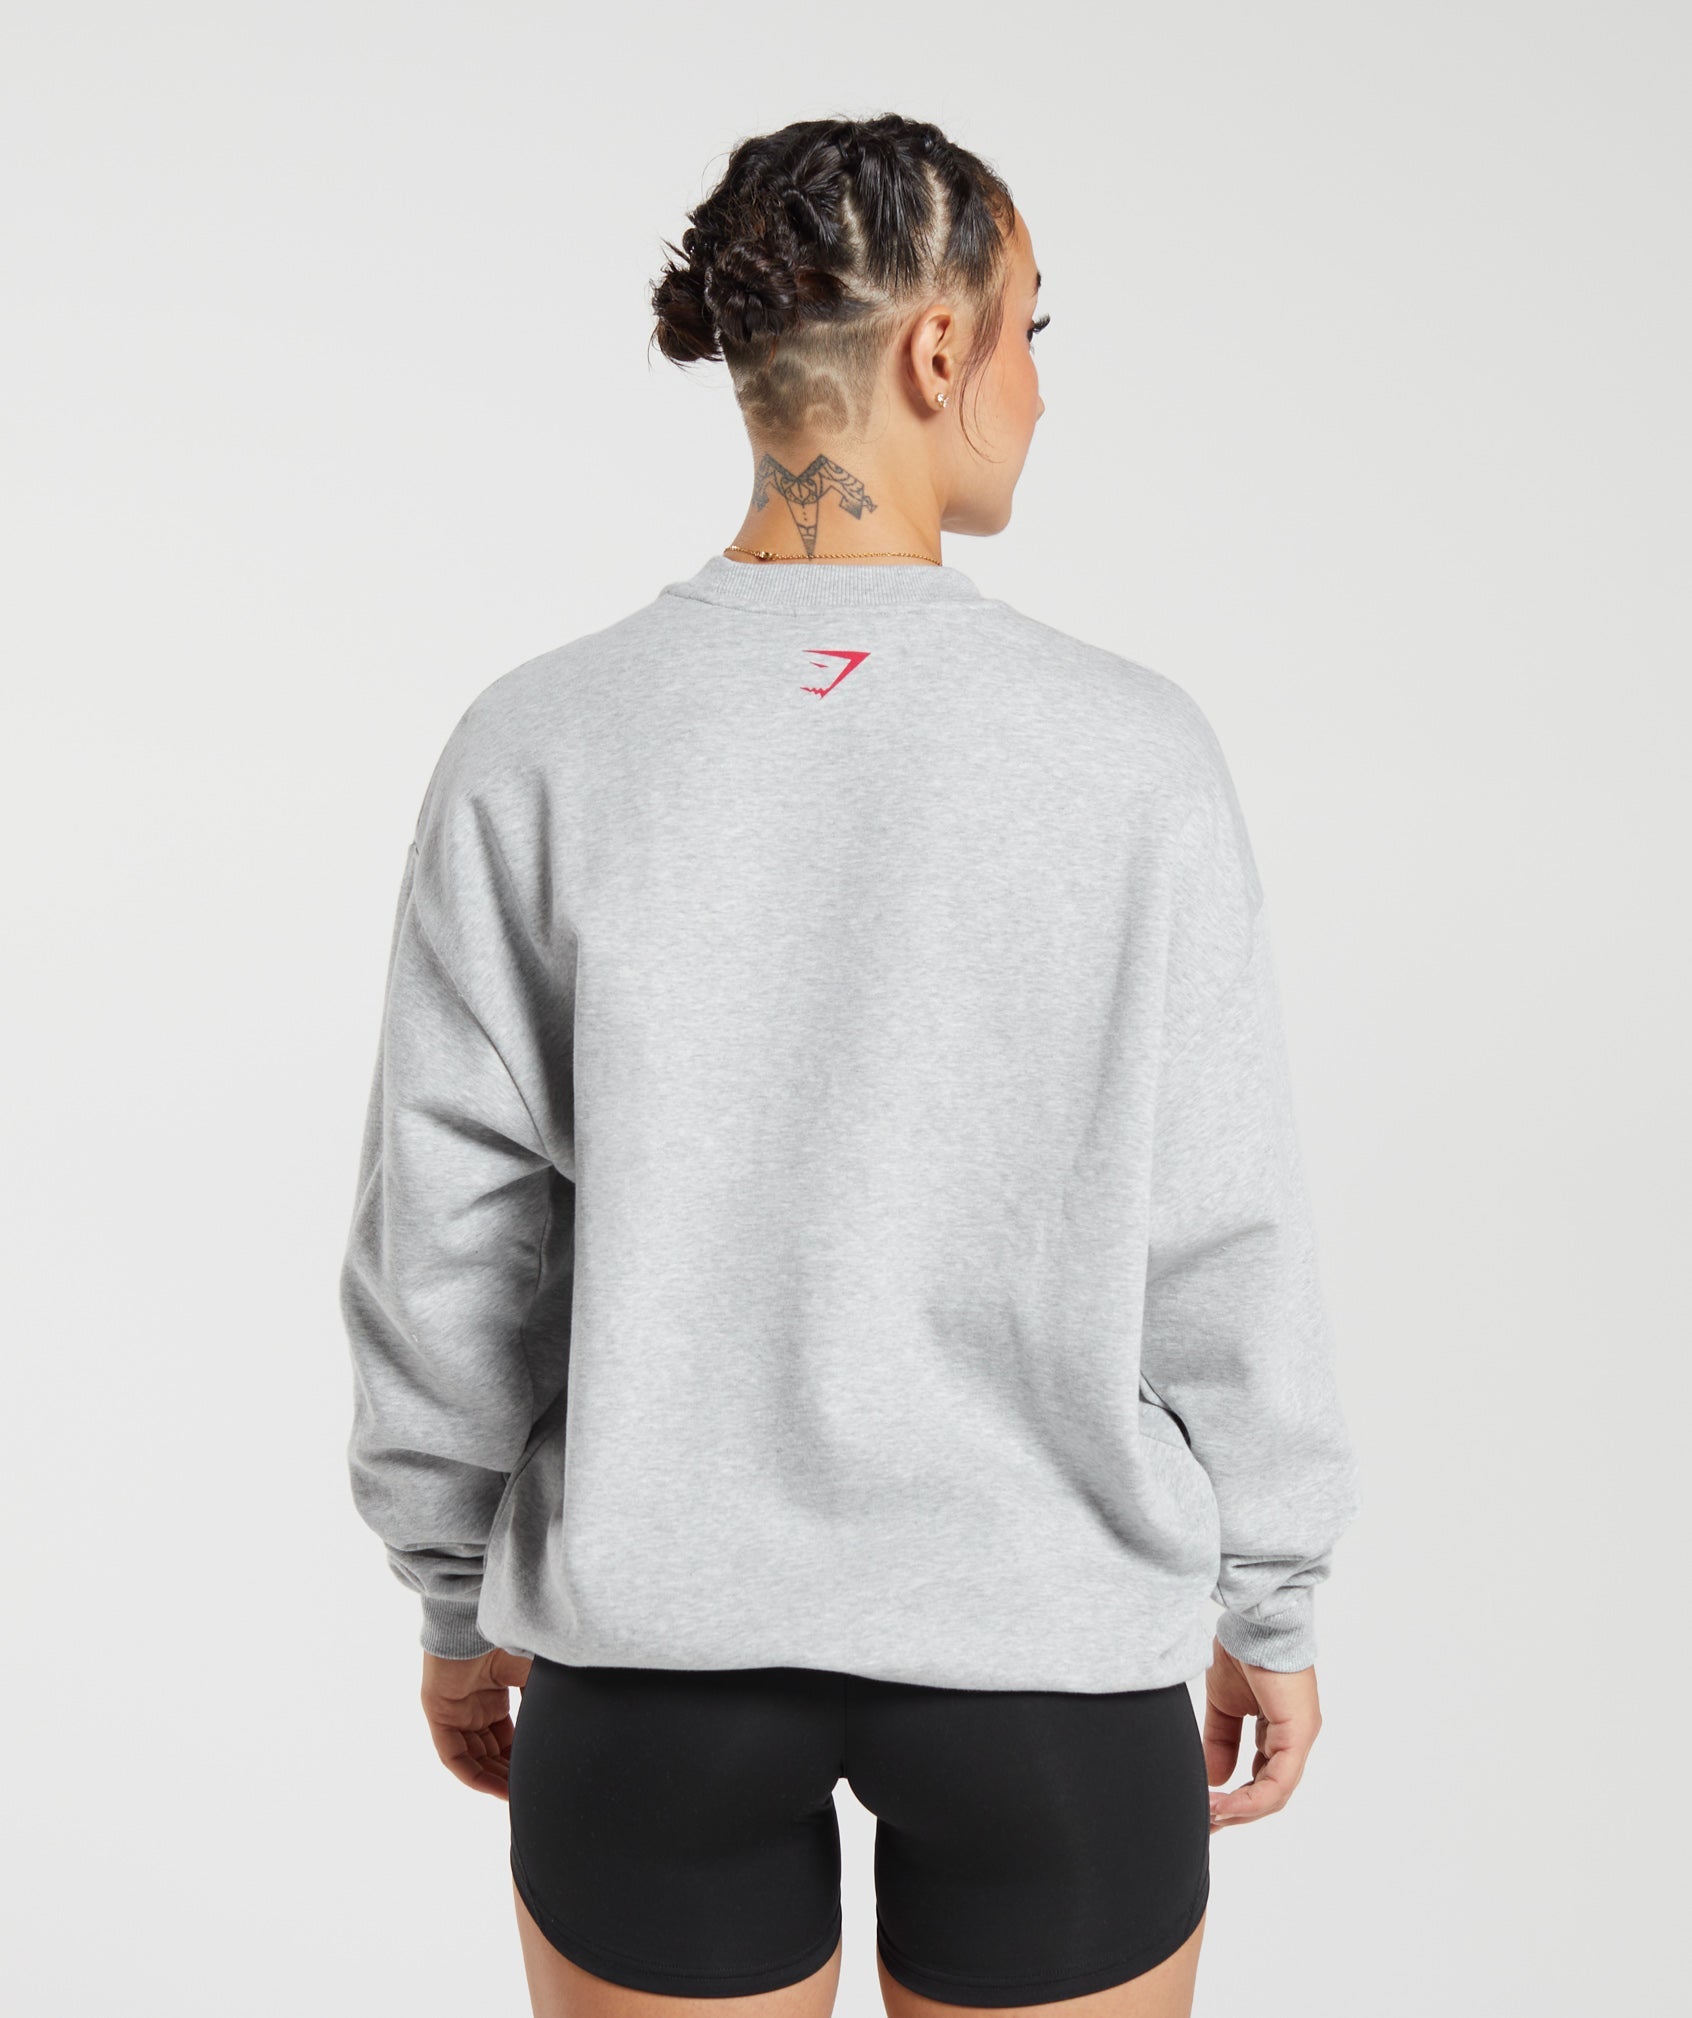 Lifting Essentials Graphic Oversized Sweatshirt in Light Grey Core Marl - view 2